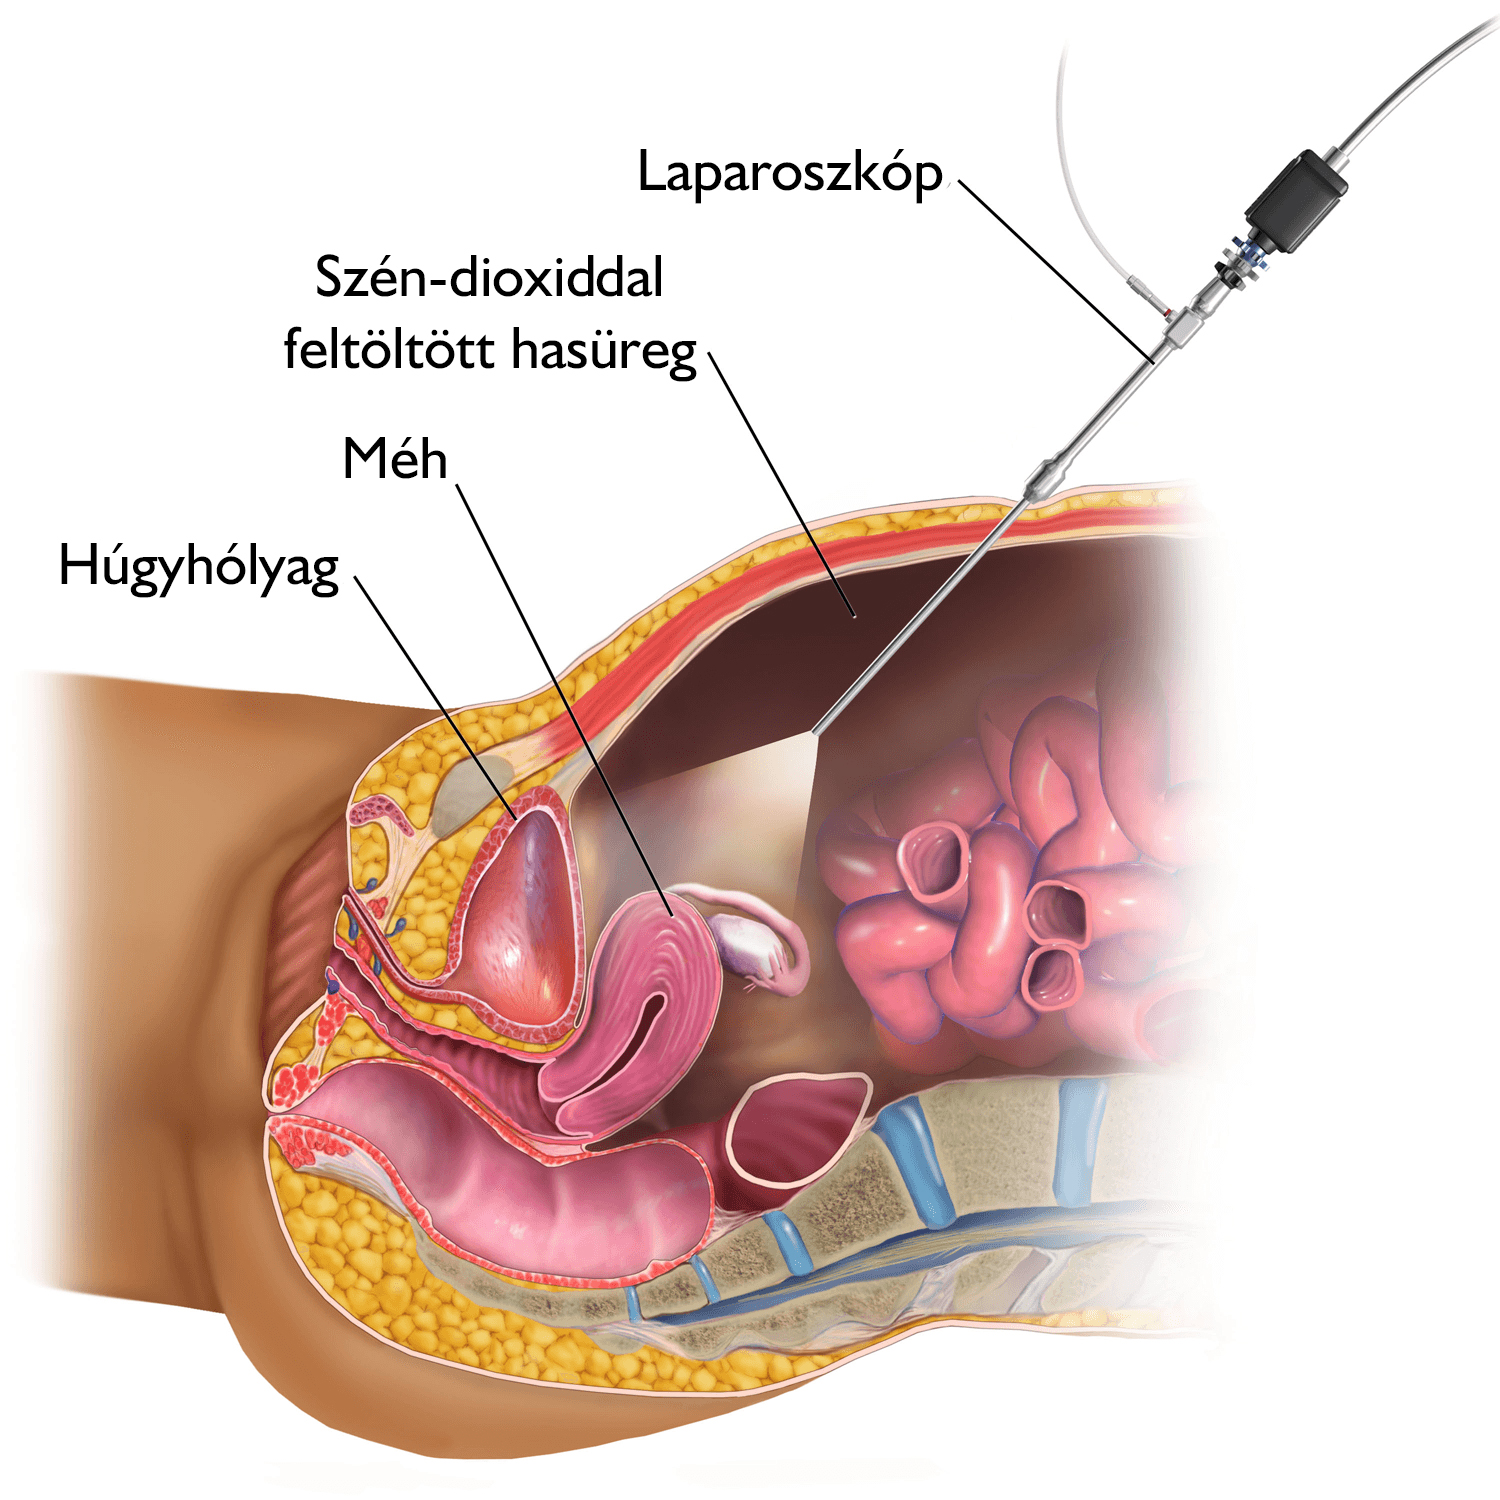 Anti-inkontinencia műtét (TOT)